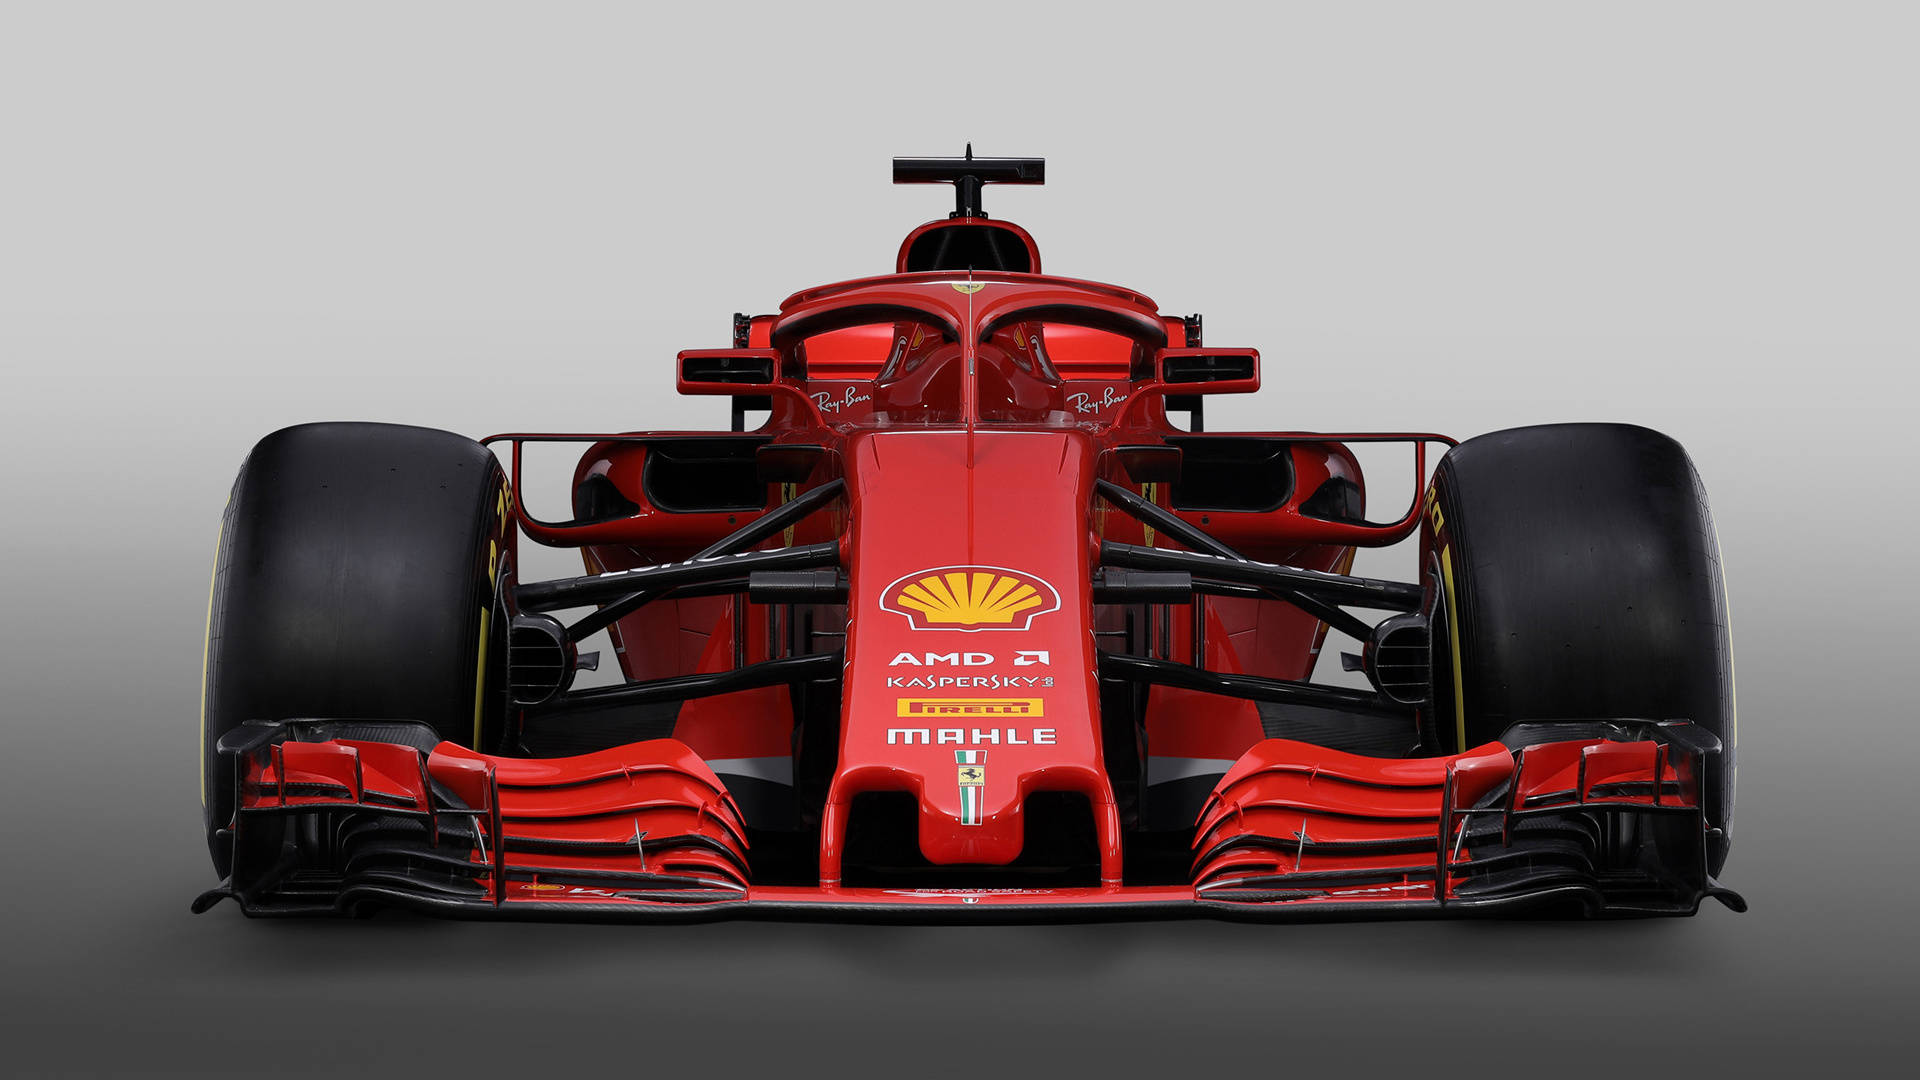 Ferrari F1 2018 Closer Front View Background